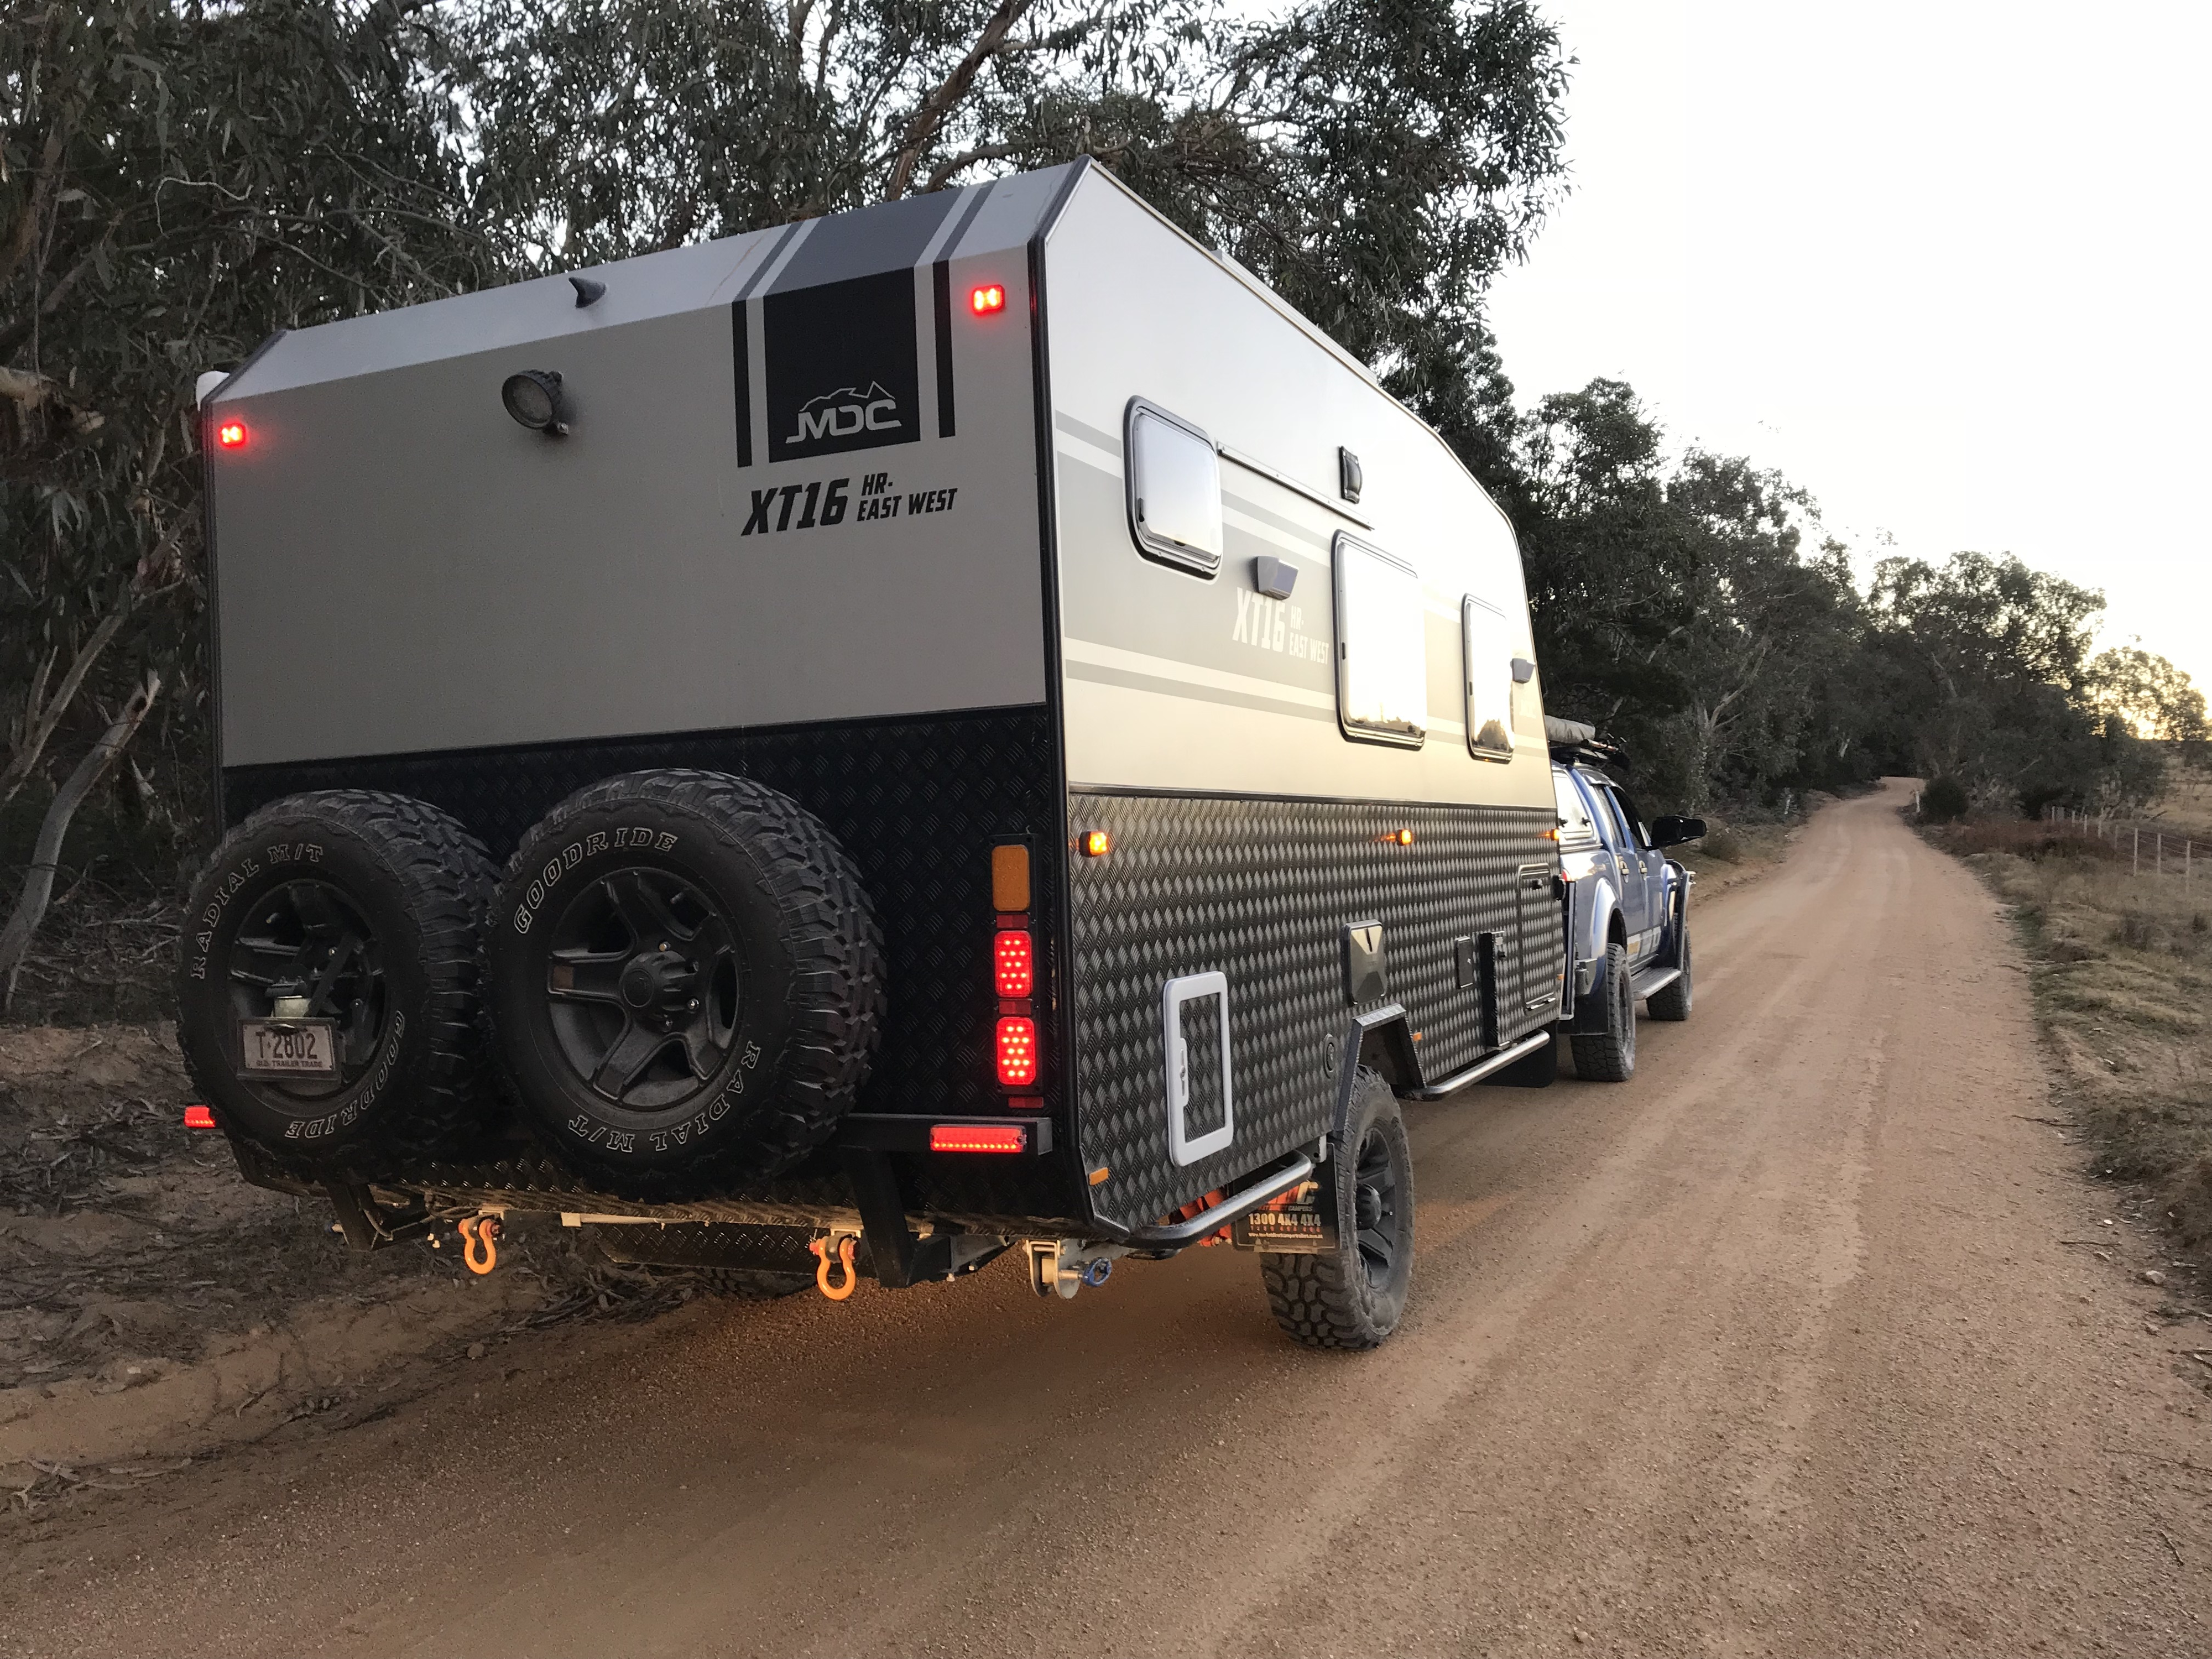 Road Trips Australia Episode 9